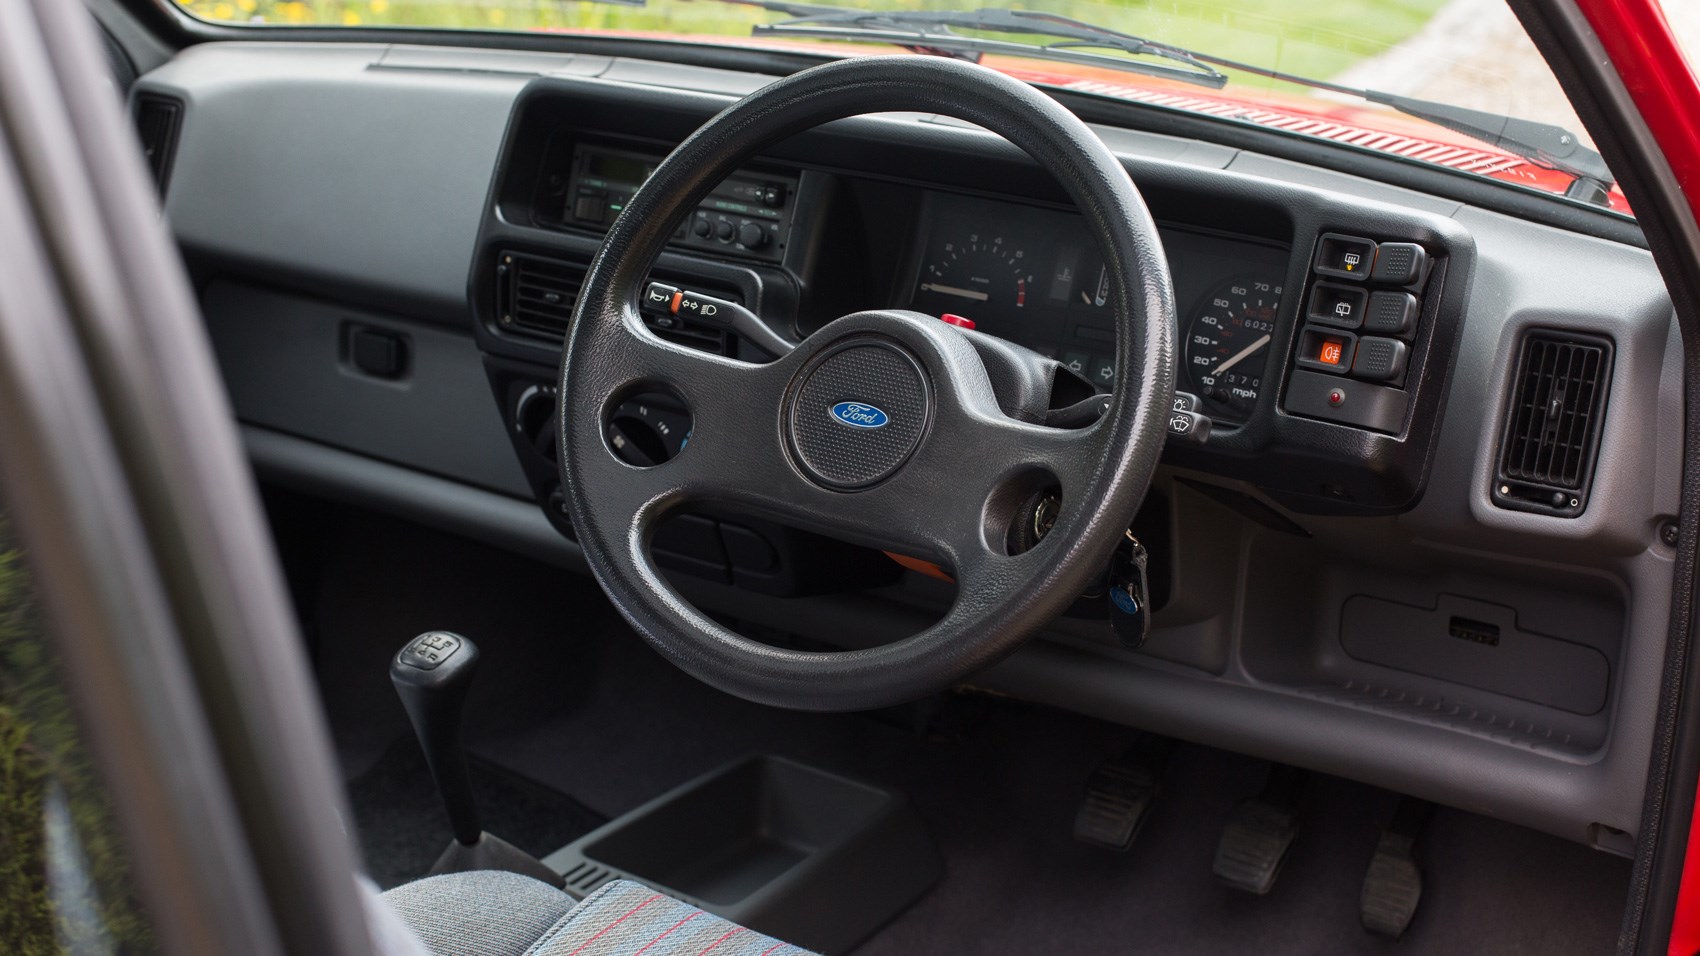 Ford Fiesta XR2 interior